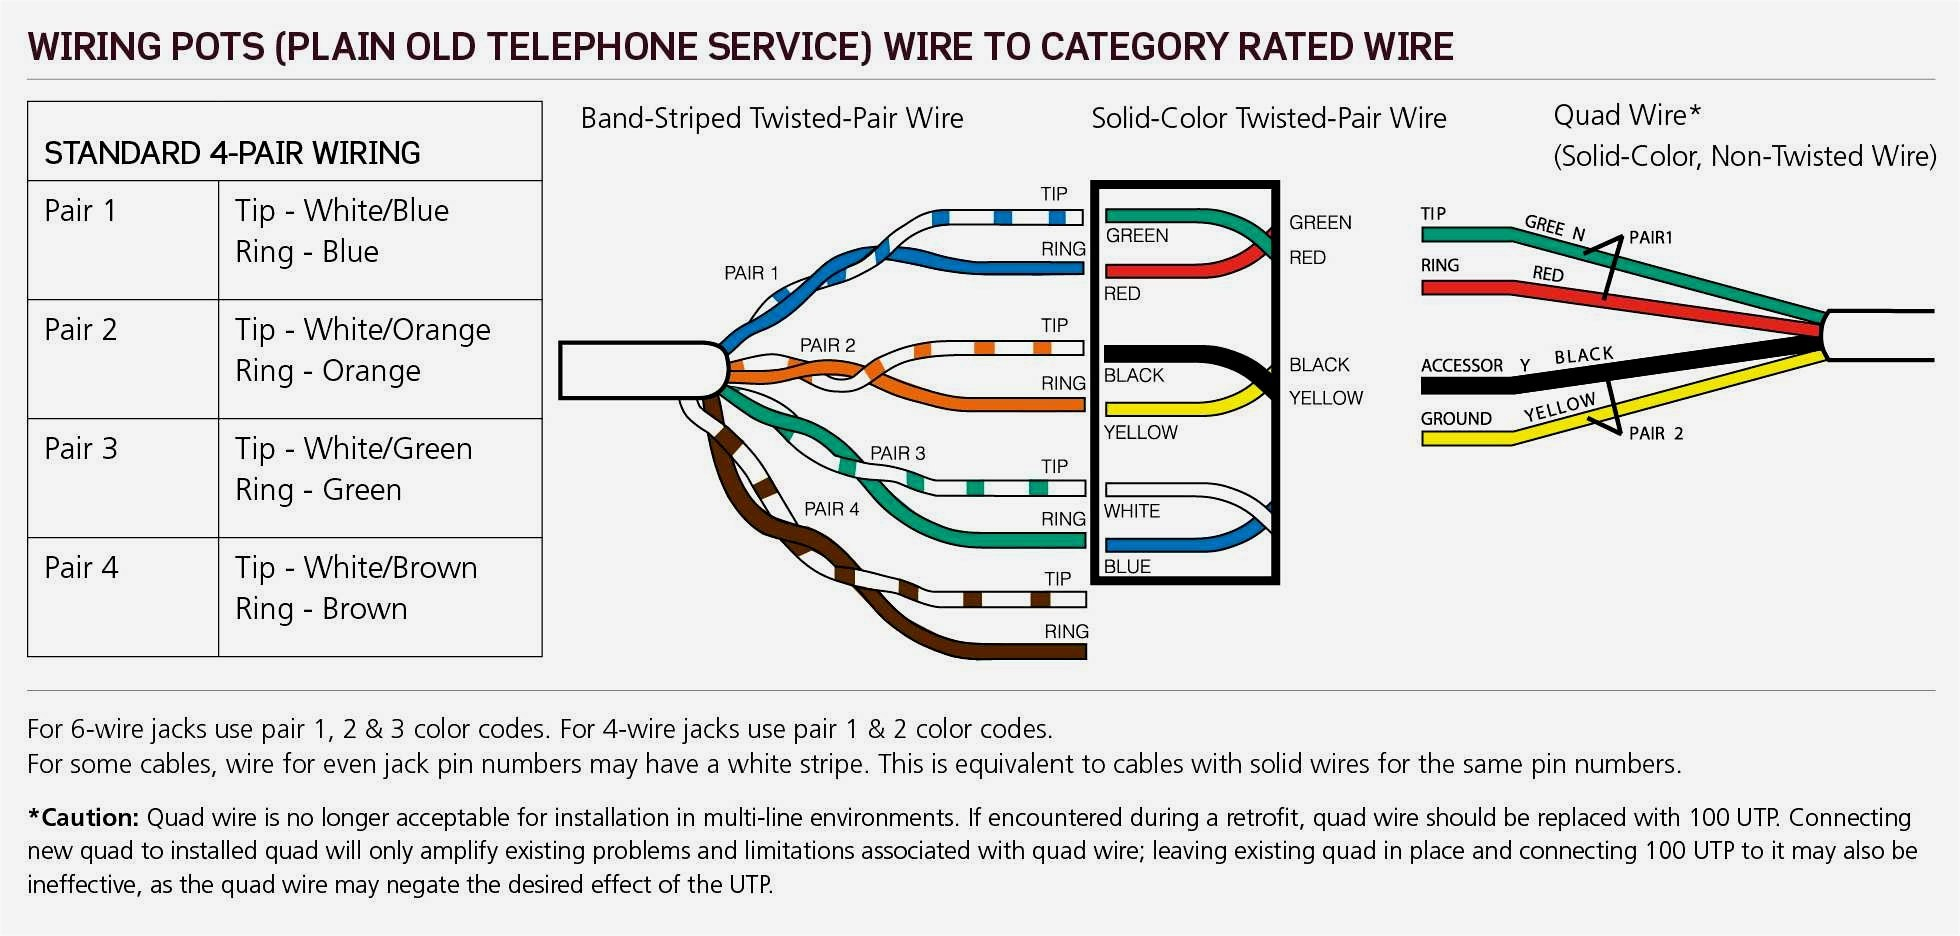 T1 Jack Wiring | Wiring Diagram - Cat5 Phone Line Wiring Diagram